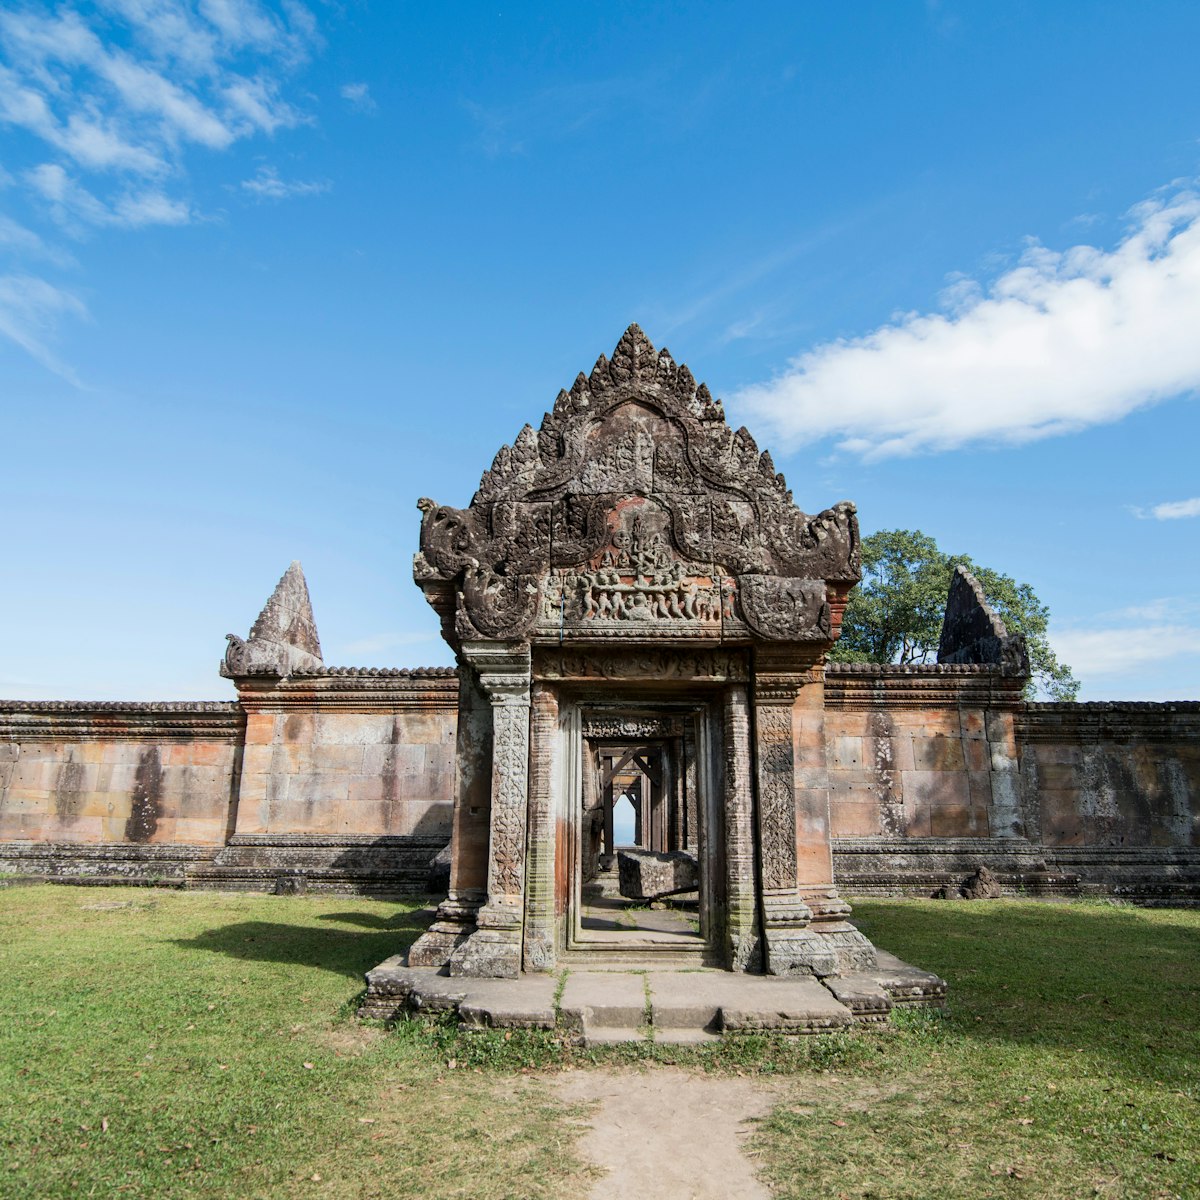 the Khmer Temples of Prsat Preah Vihear north of the town Sra Em in the province of Preah Vihear in Northwest Cambodia. Cambodia, Sra Em, November, 2017,
1148613875
asia, border ruins, border temple, cambodia, cambodia border, khmer city, khmer ruin, khmer ruins, khmer temple, landmark, northwest cambodia, prasat, prasat preah vihear, preah vihear, preah vihear province, preah vihear ruins, ruin, southeast asia, srayong, thai border, thailand cambodia